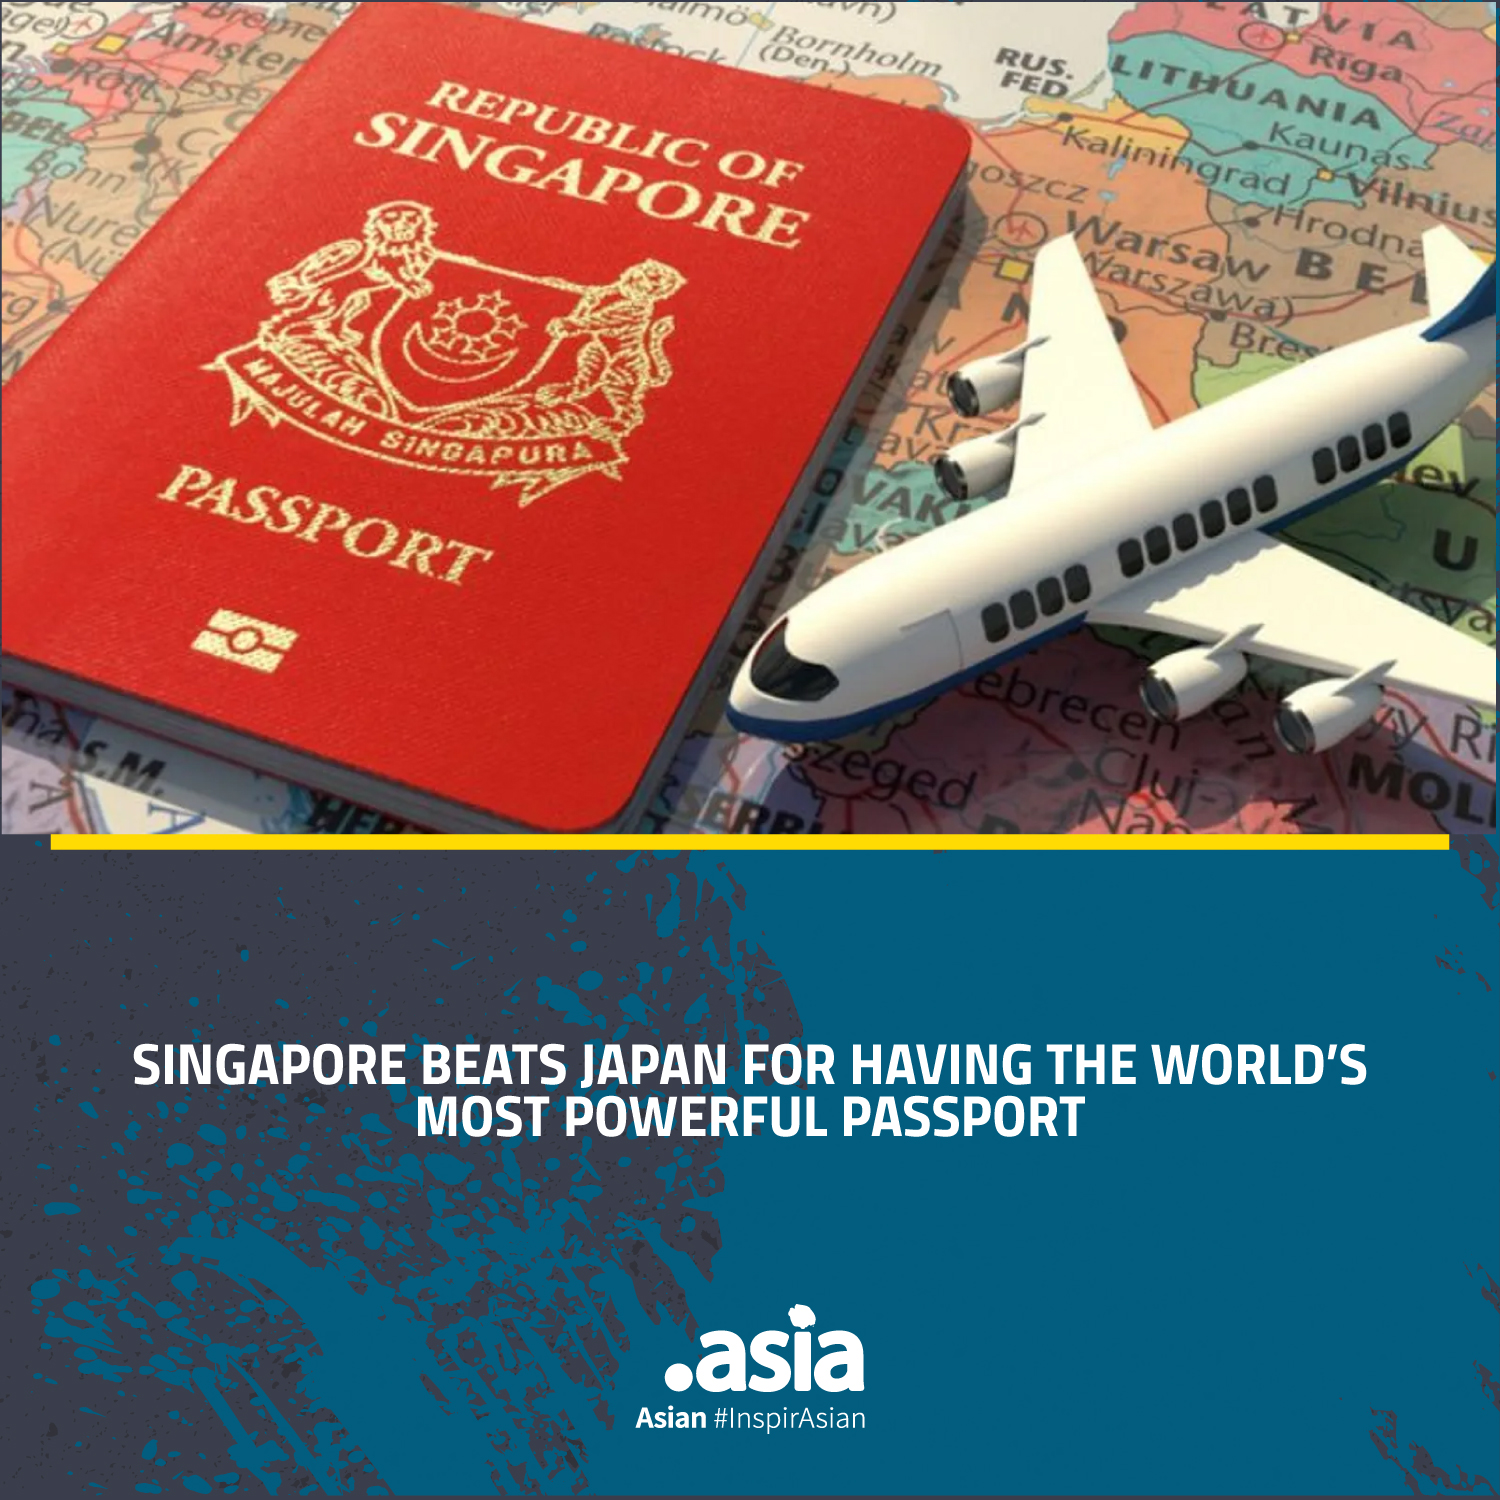 Image: Singapore Passport and Map